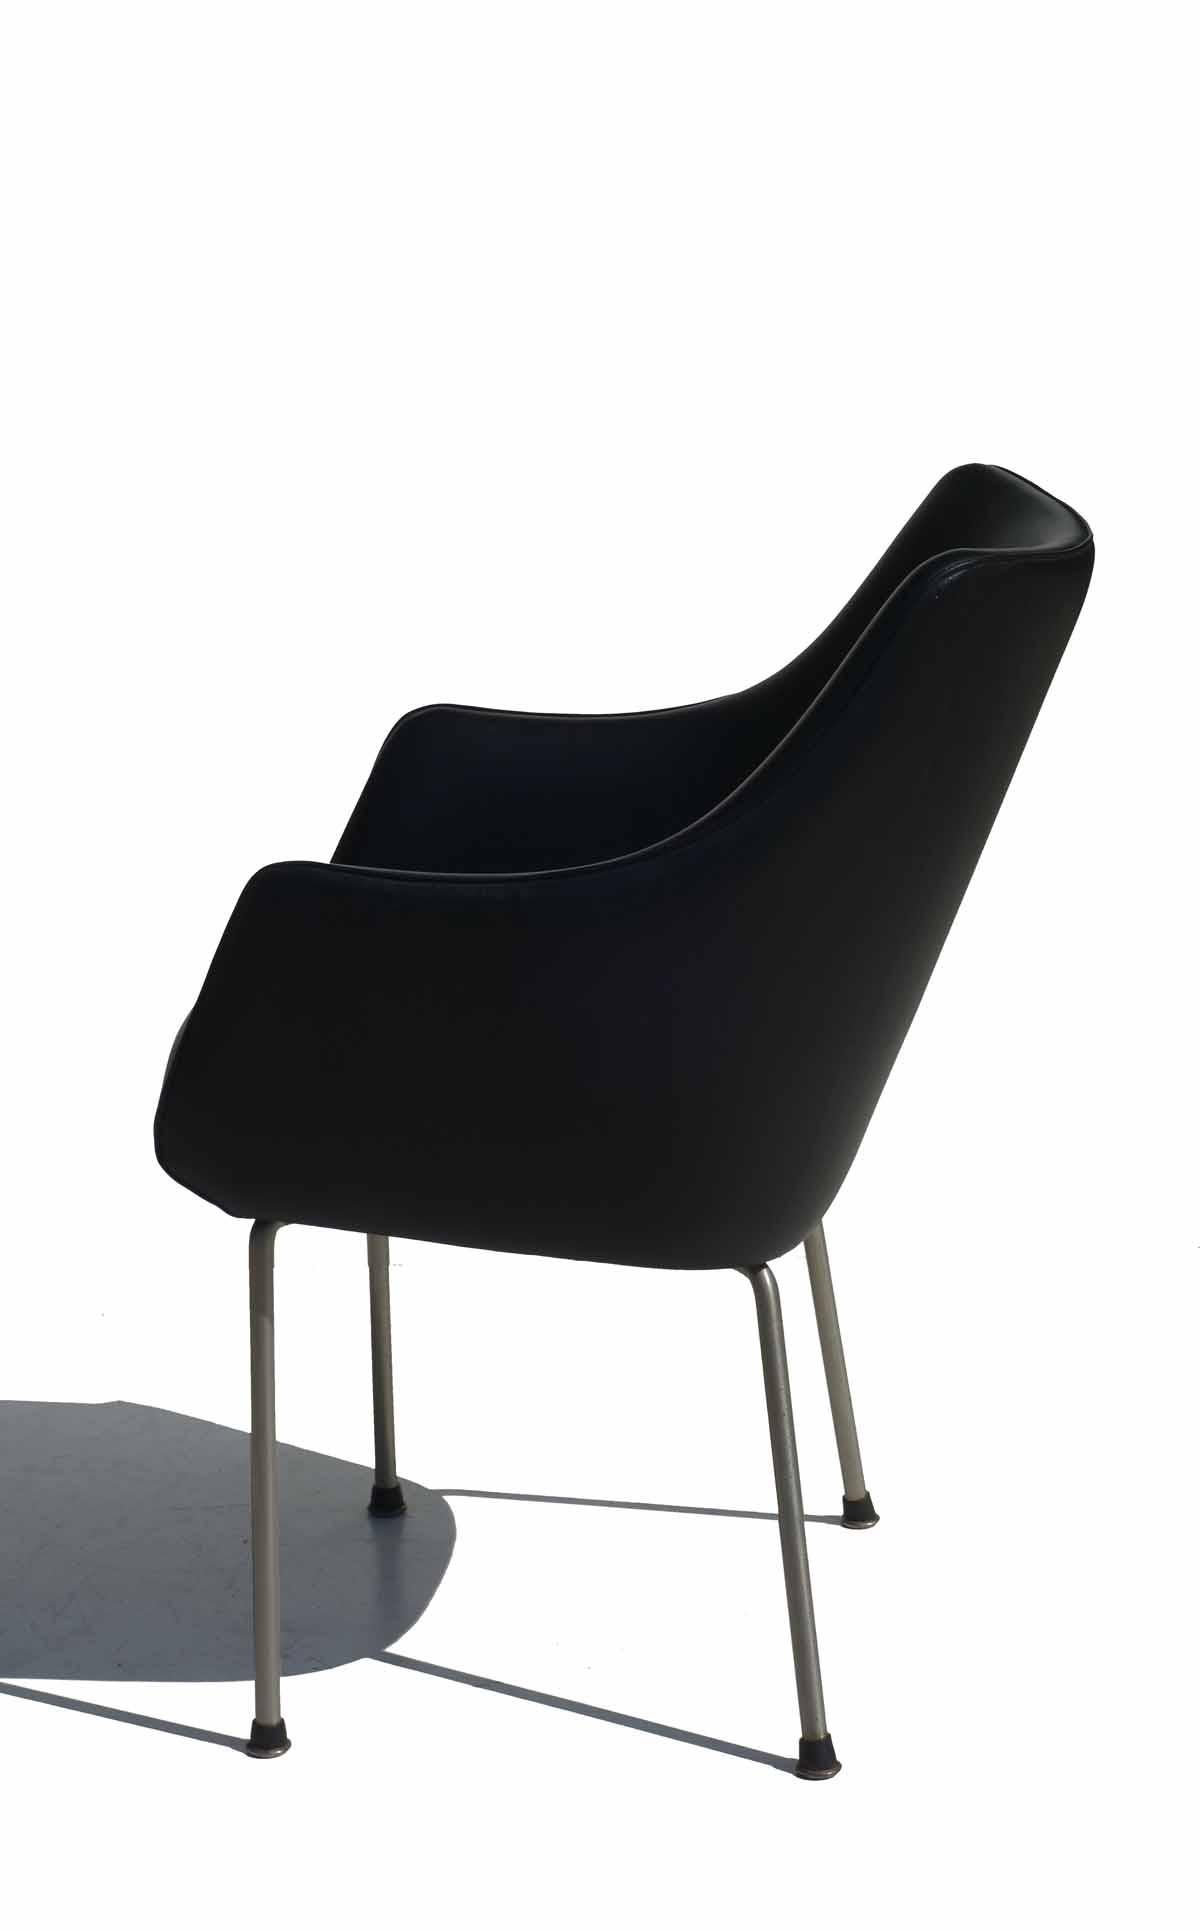 Mid-20th Century P20 Osvaldo Borsani for Tecno 1955 Mid-Century Modern Pair of Chairs For Sale